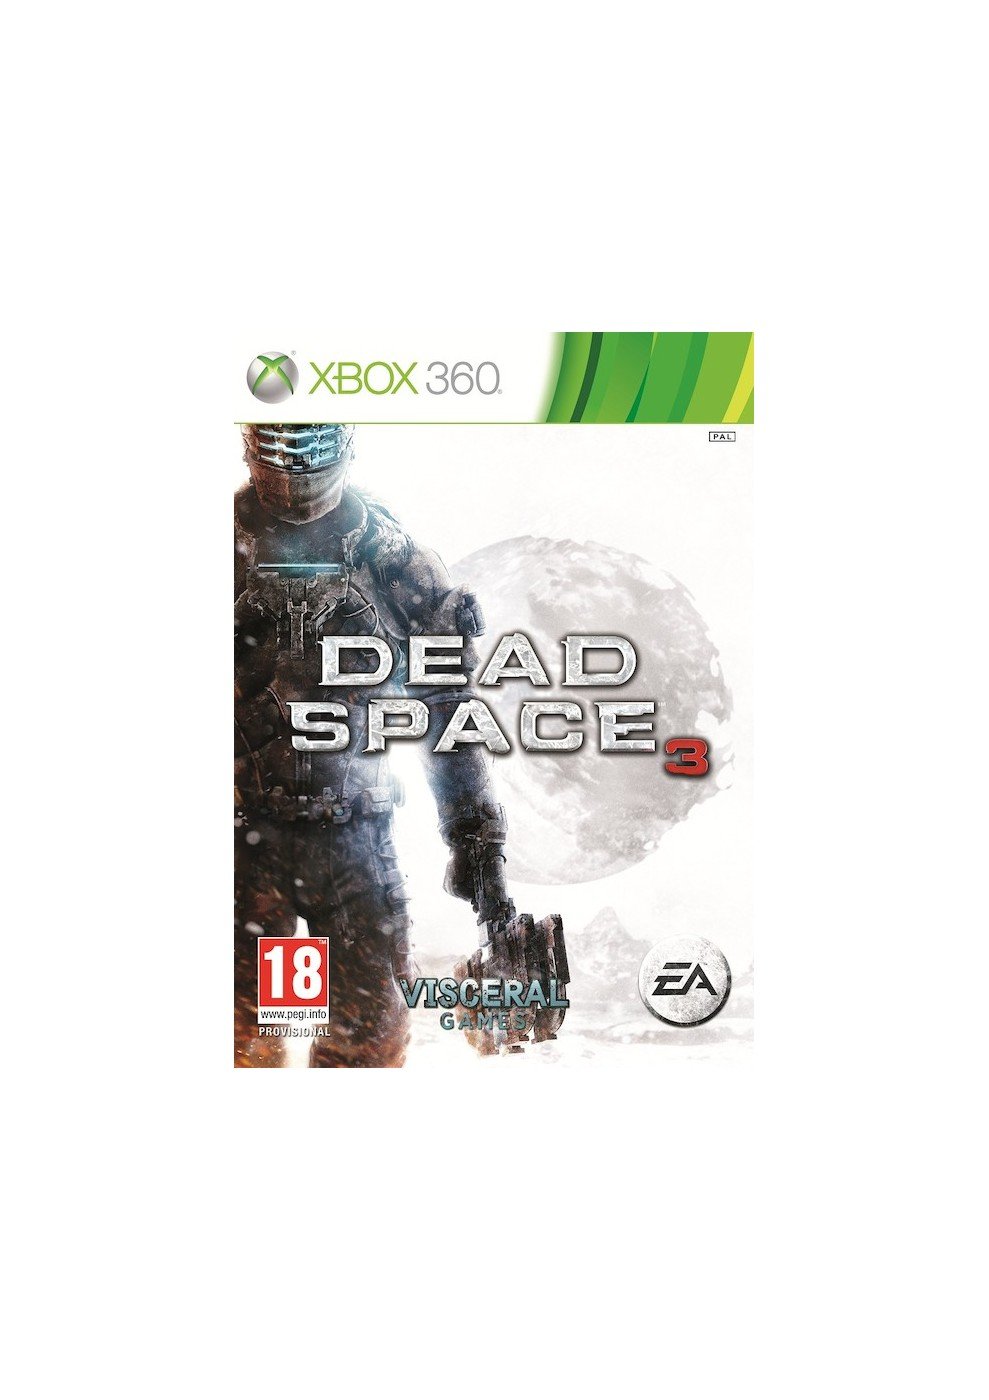 Dead Space 3 von Electronic Arts